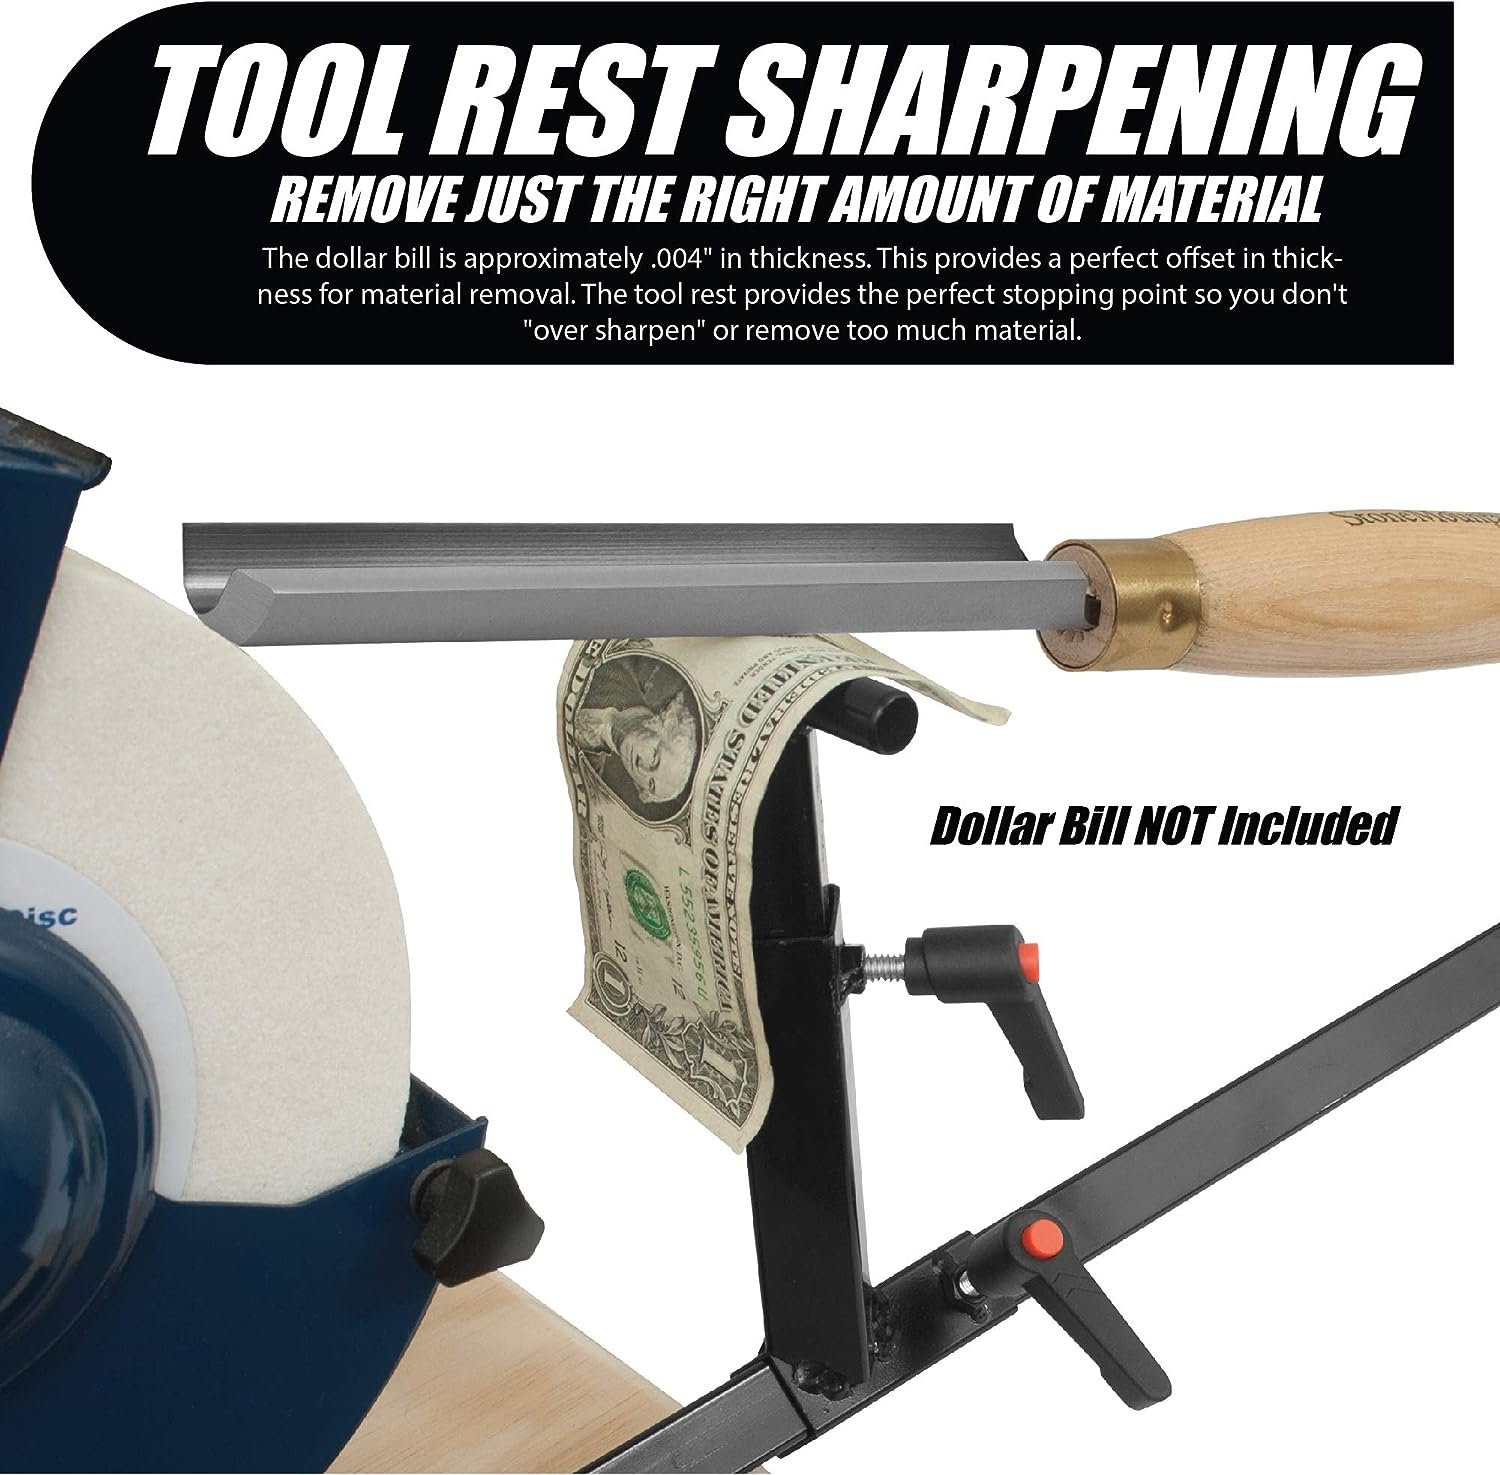 Pro Grind Sharpening System For Lathe Turning Tools, Chisels, Skews, Bowl Spindle Gouges and More. Includes the Multi-Grind Jig, Slotted Platform and Tool Rest